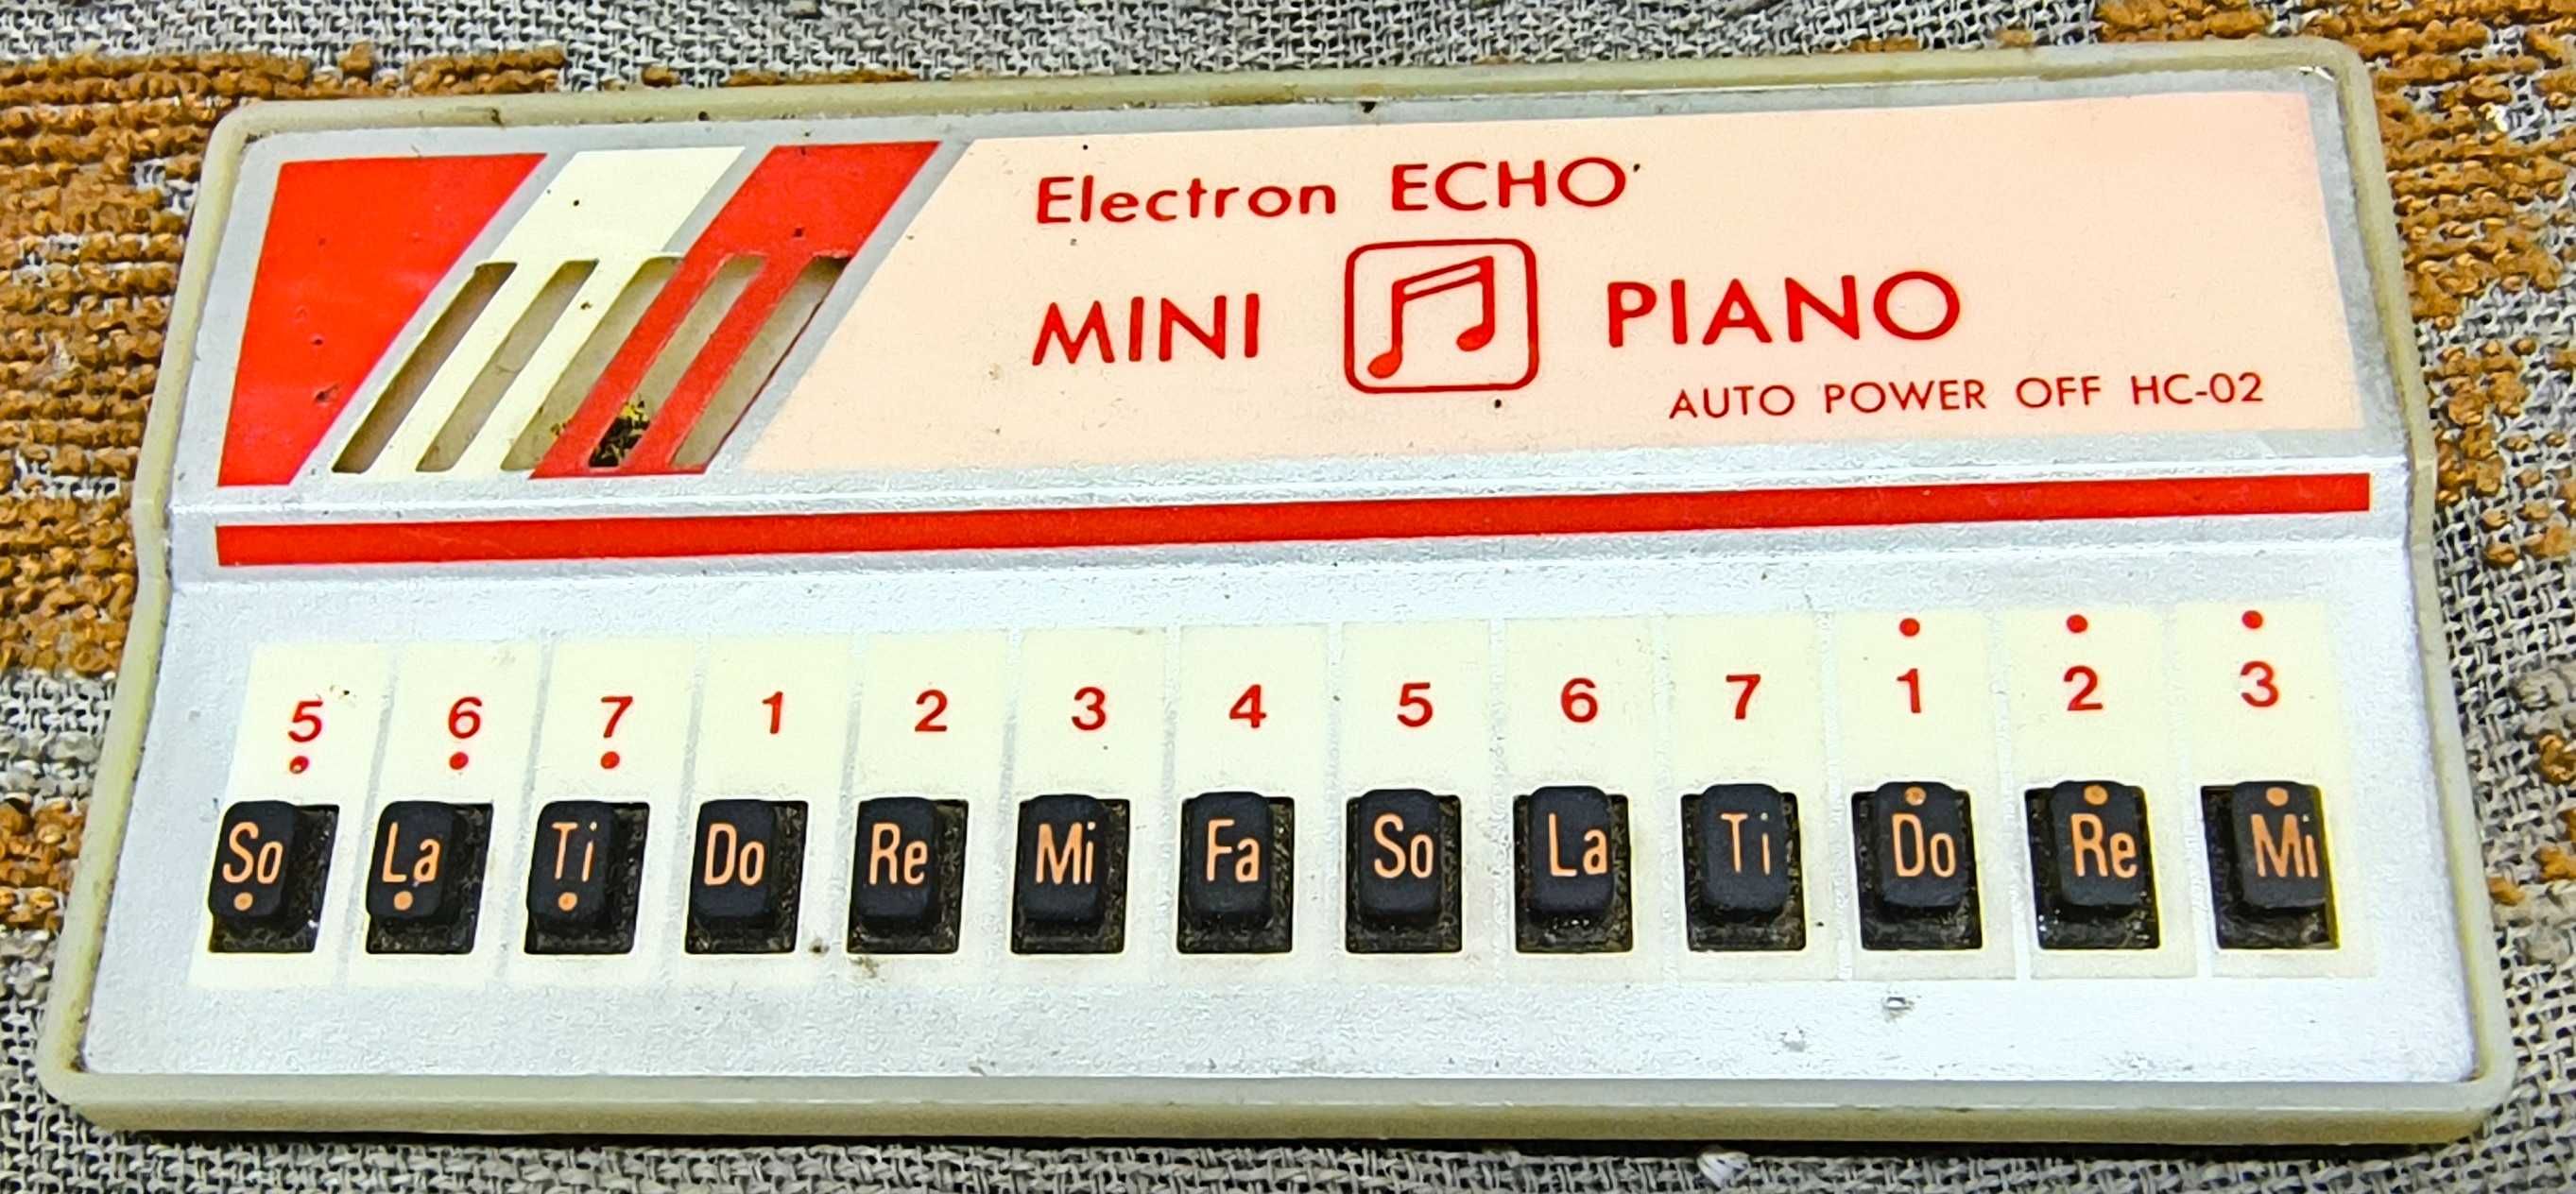 Electron echo mini piano organki PRL